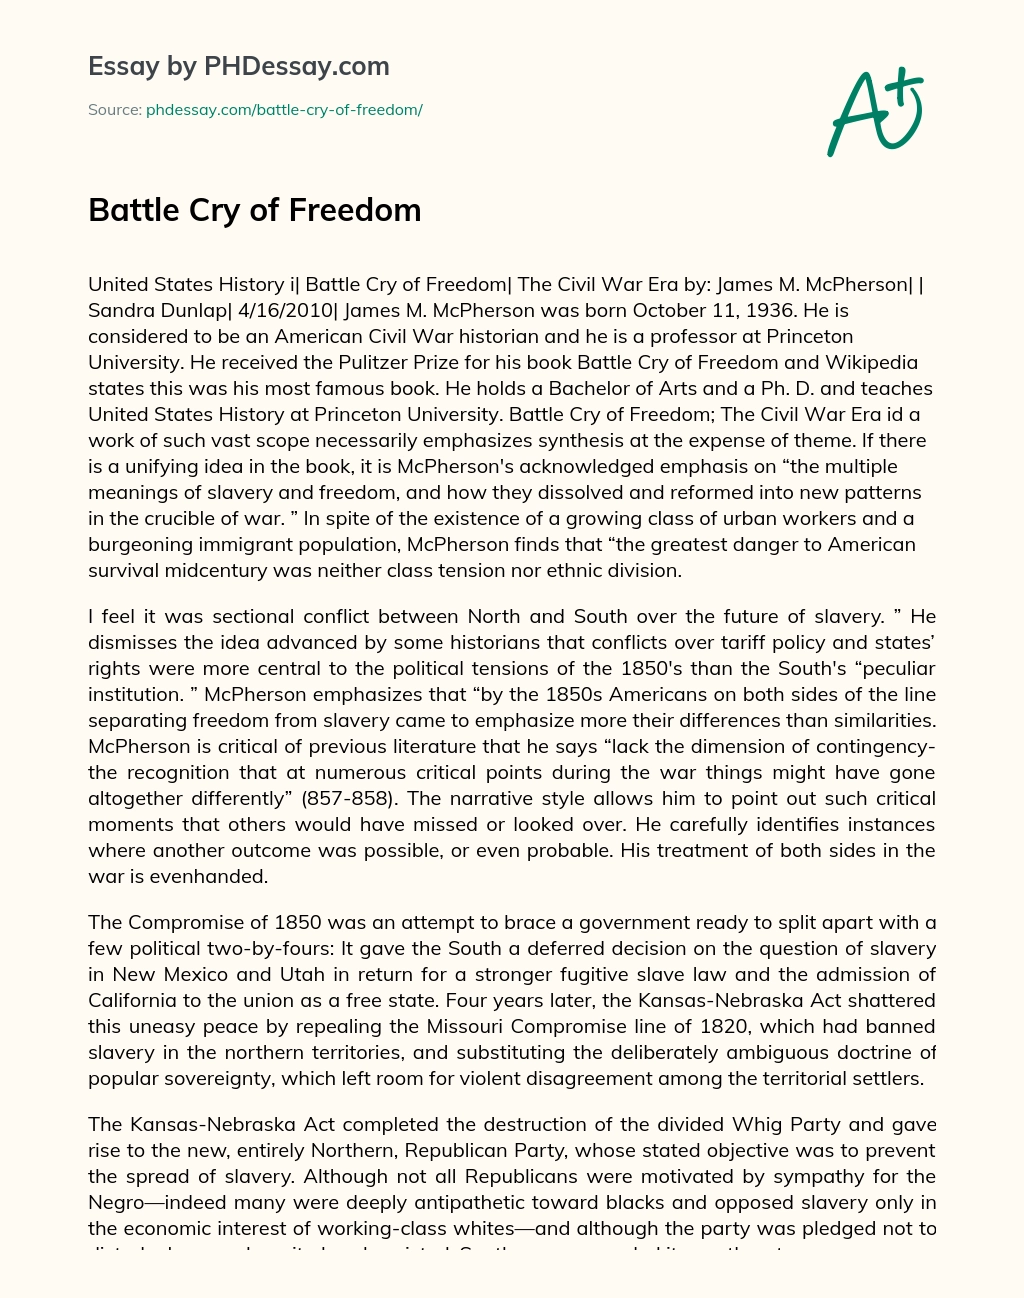 Battle Cry of Freedom essay